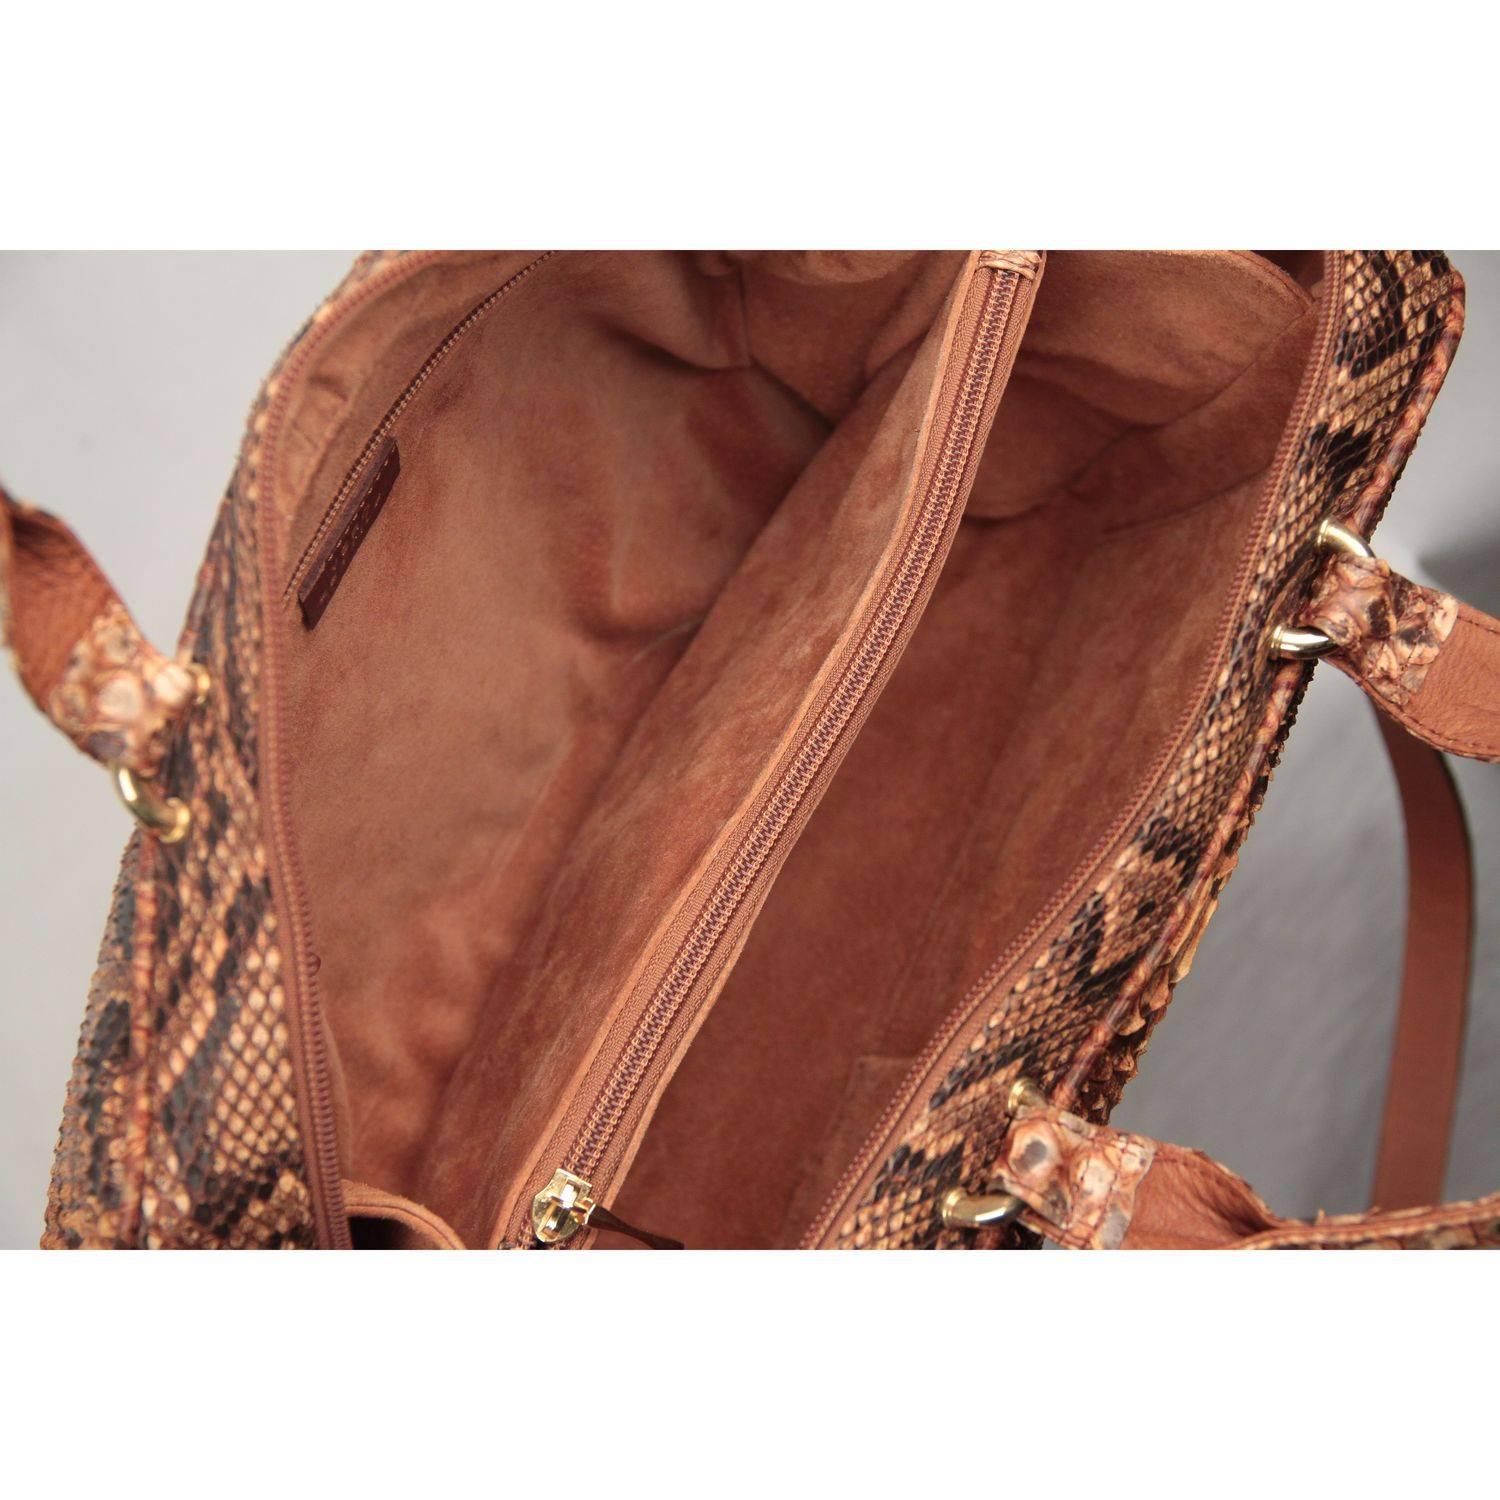 snakeskin satchel bag